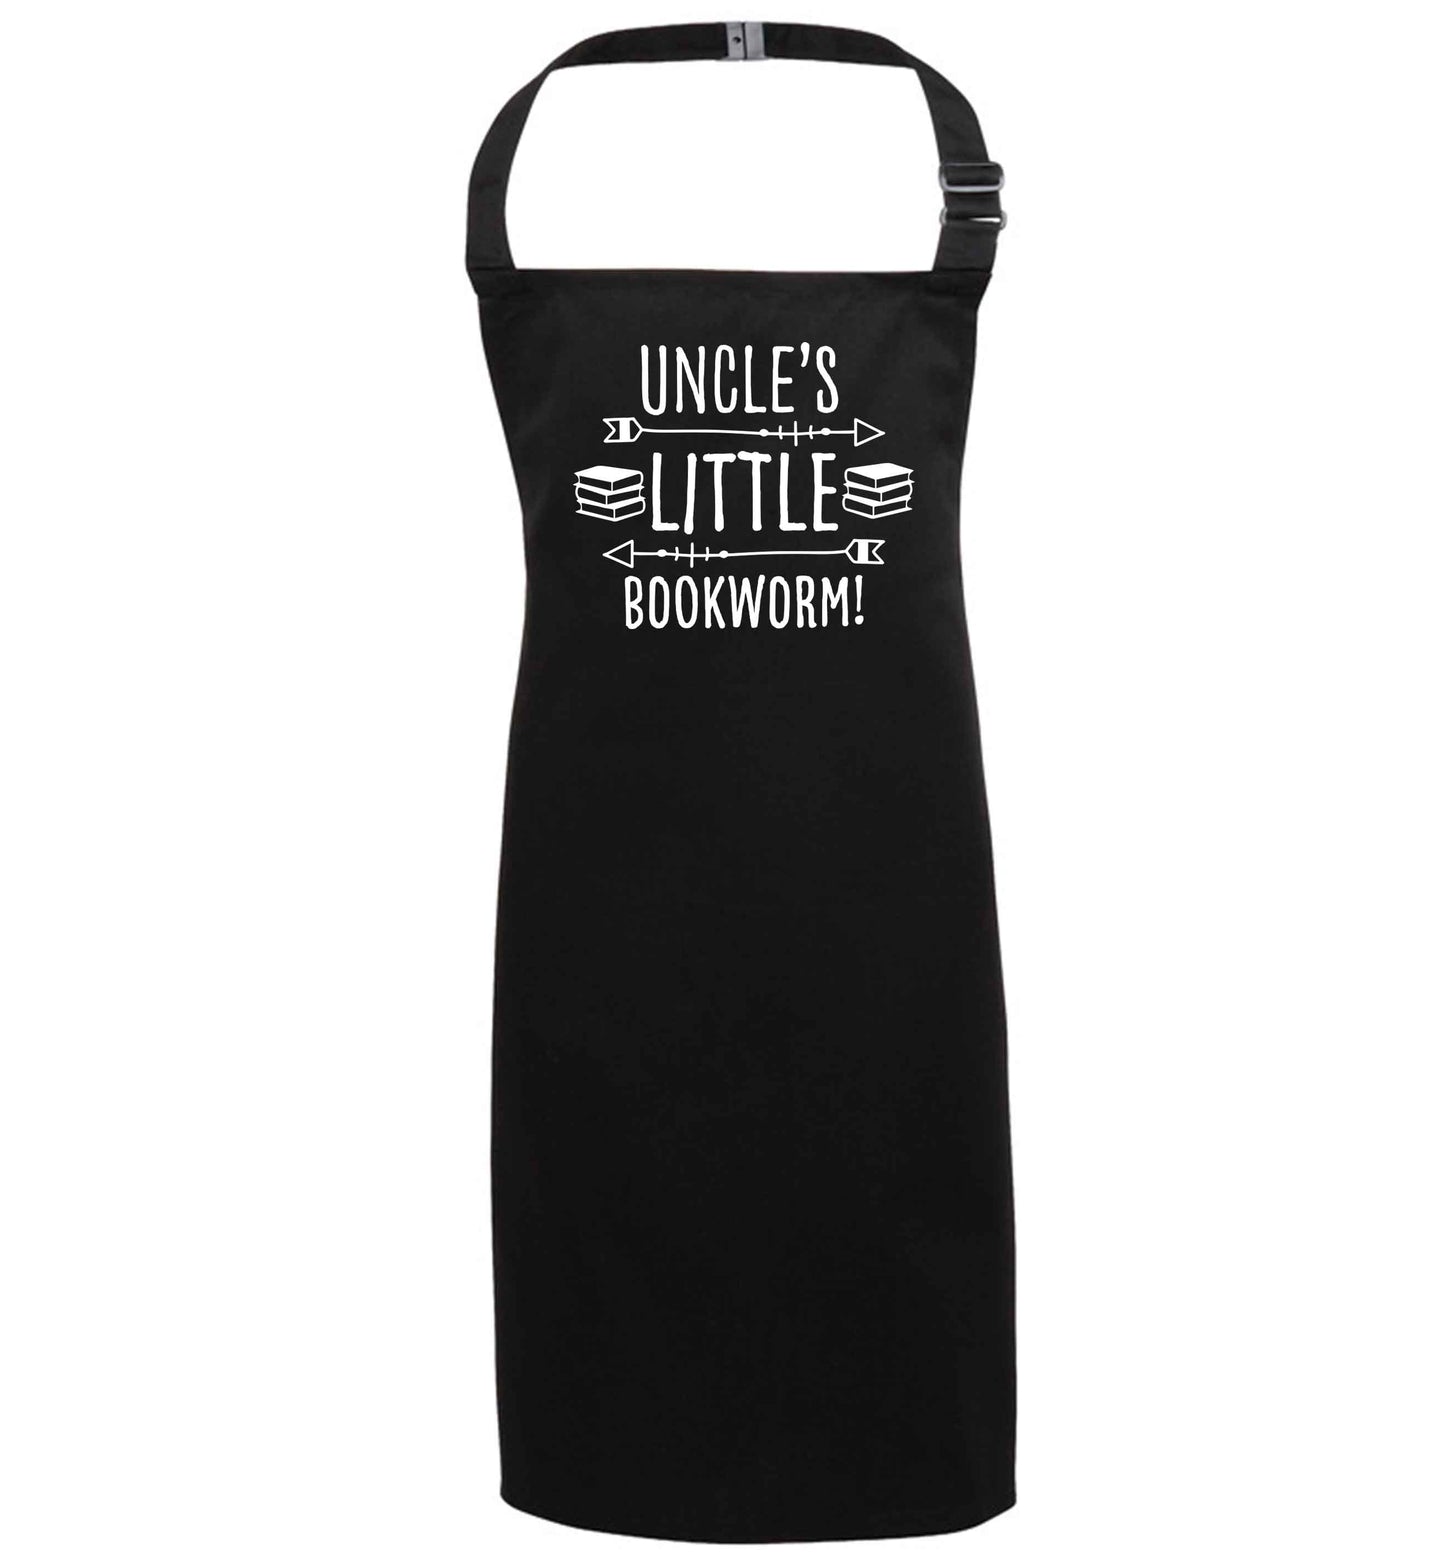 Uncle's little bookworm black apron 7-10 years